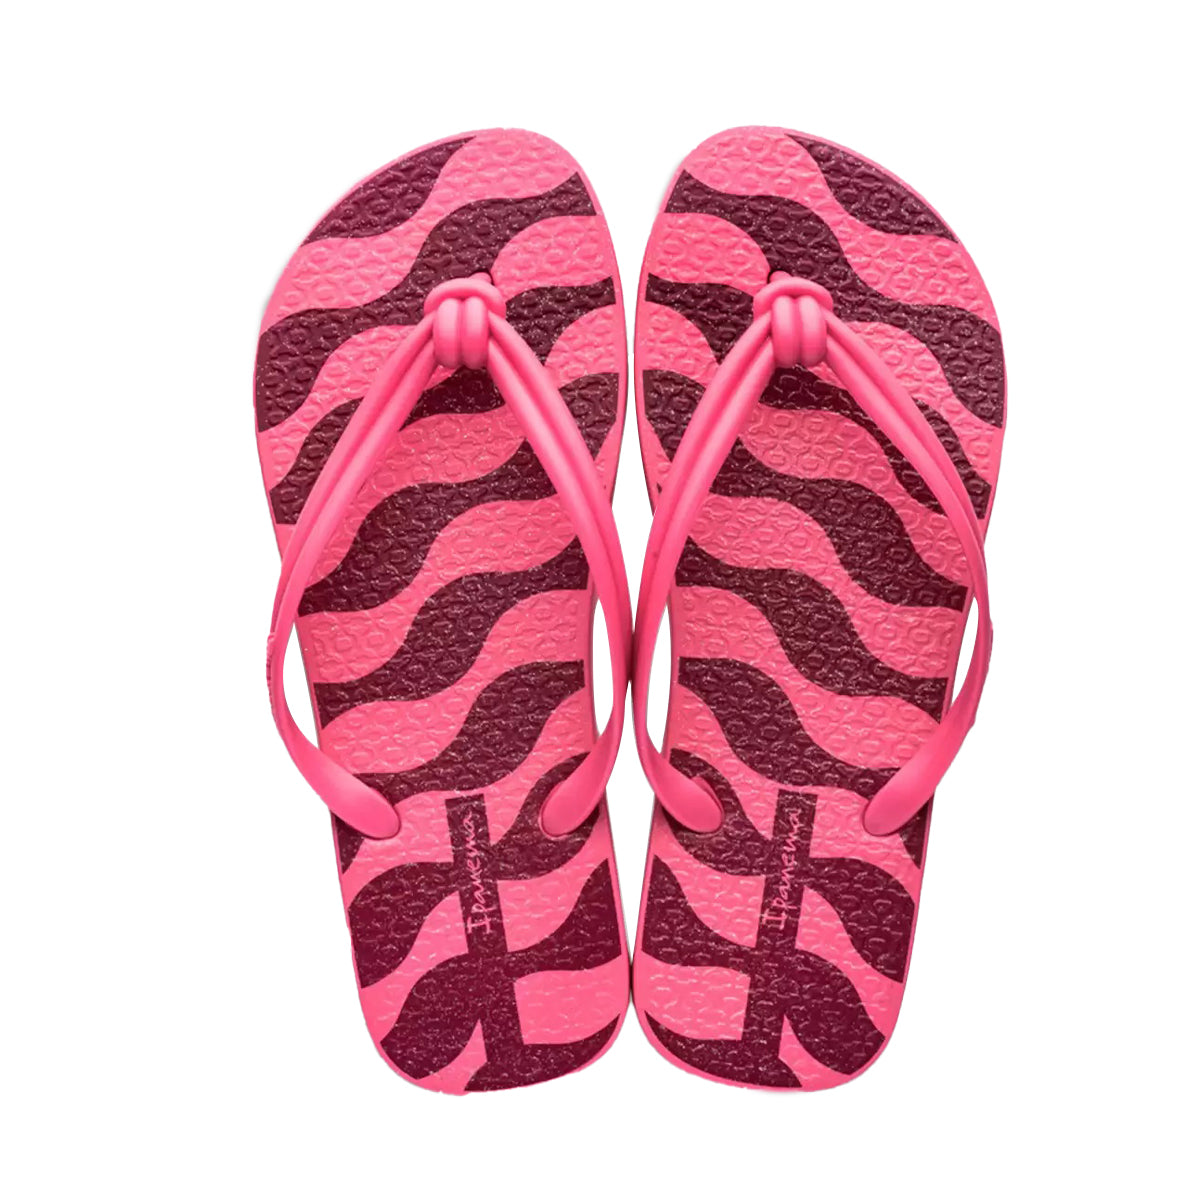 Ipanema Flip-Flops For Women, Pink & Dark Red